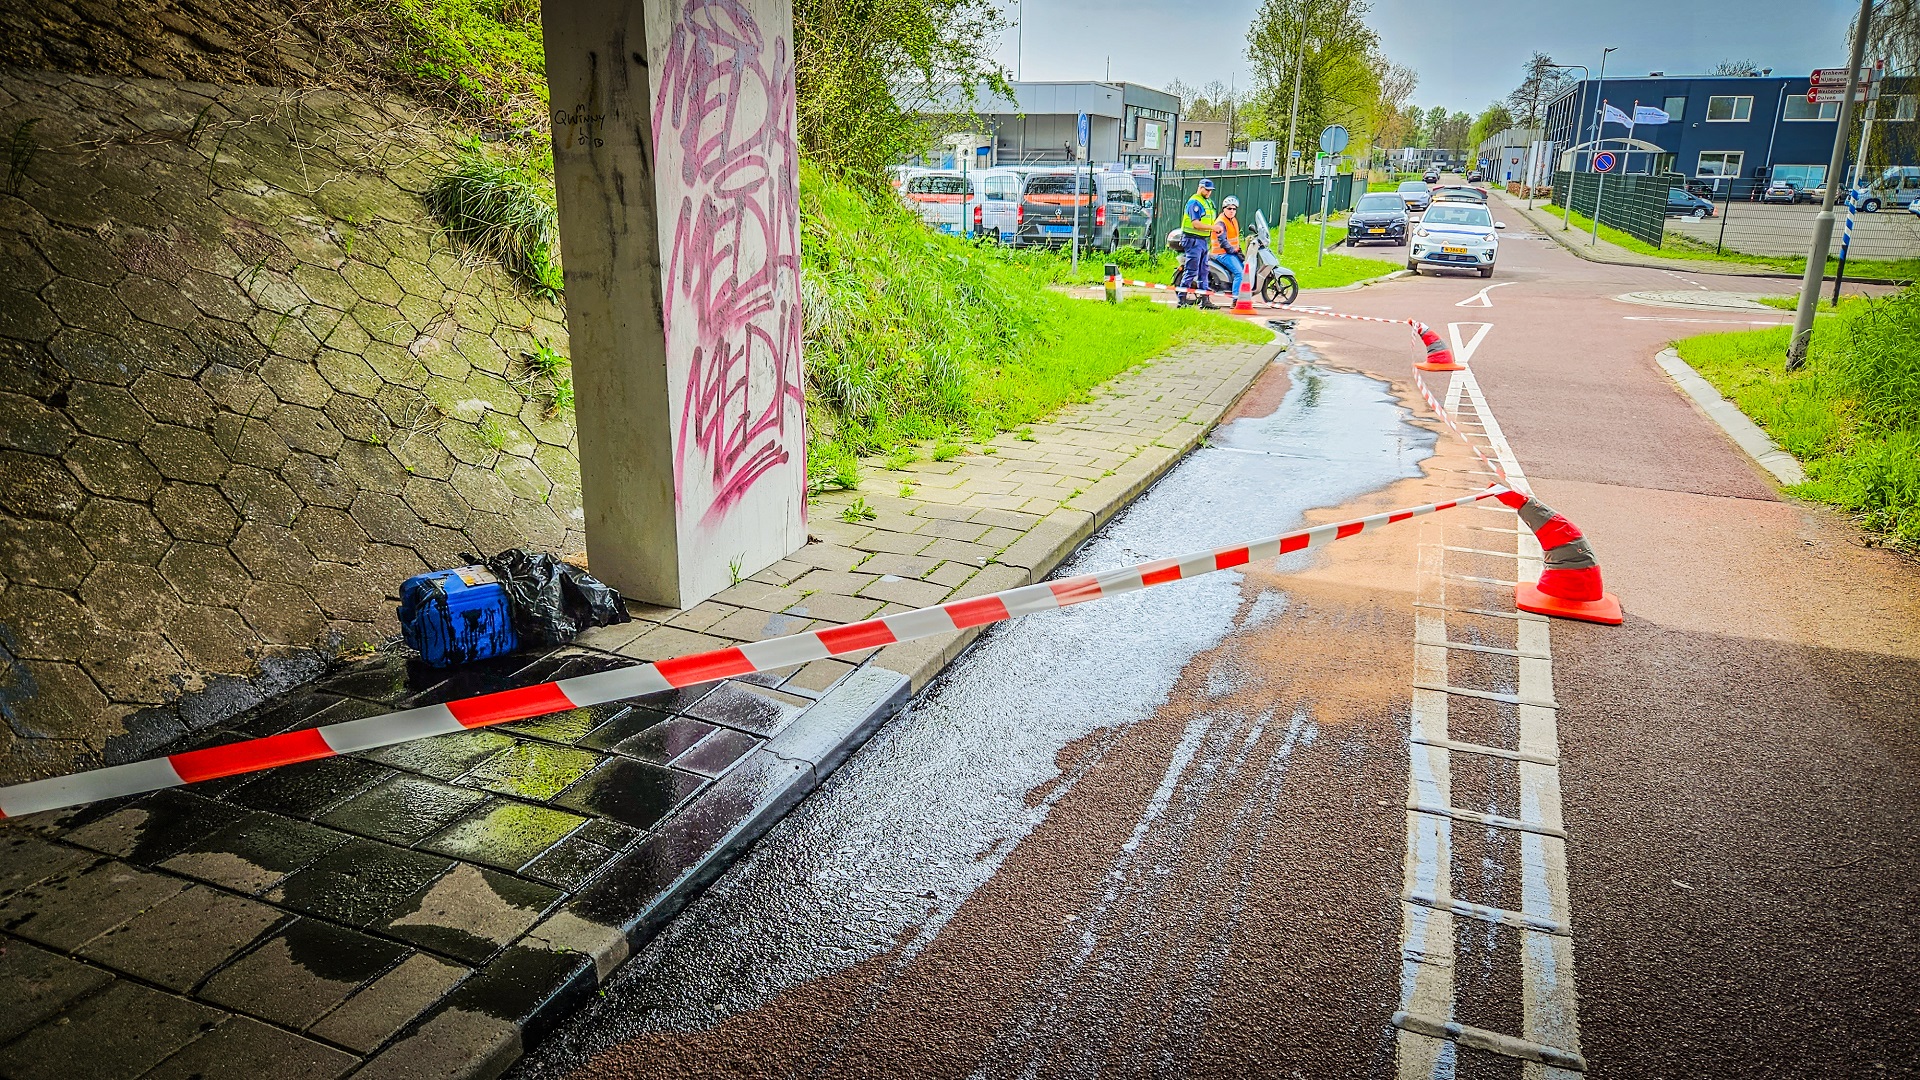 Gedumpt olievat lekt op fietspad in Arnhem